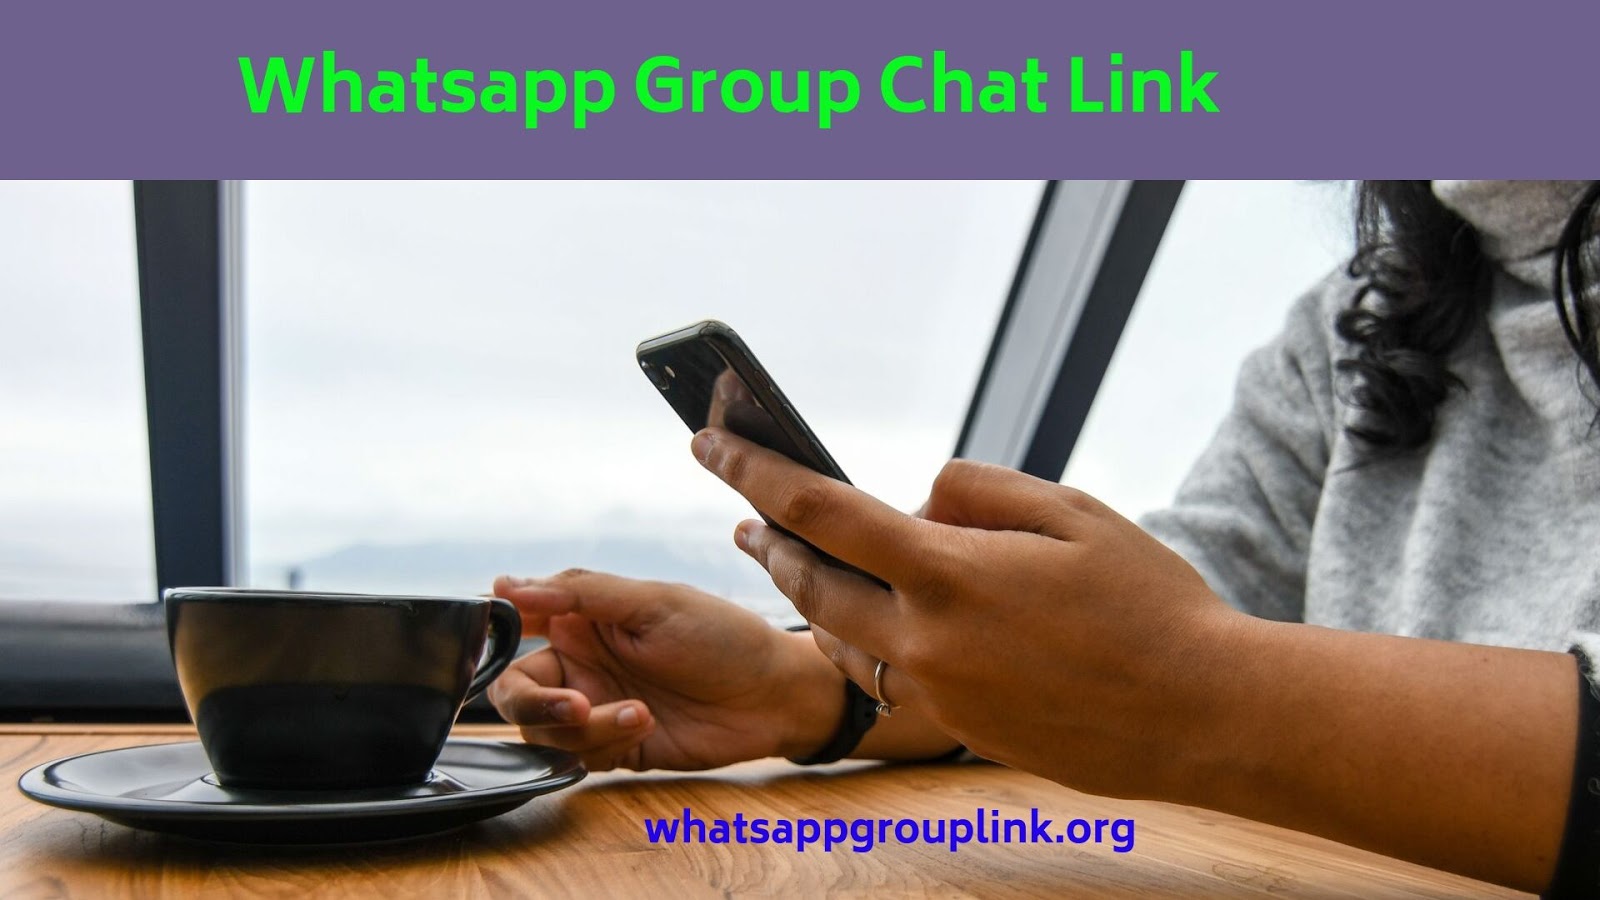 Www - Whatsappgrouplink - Org - Mobile Phone - HD Wallpaper 